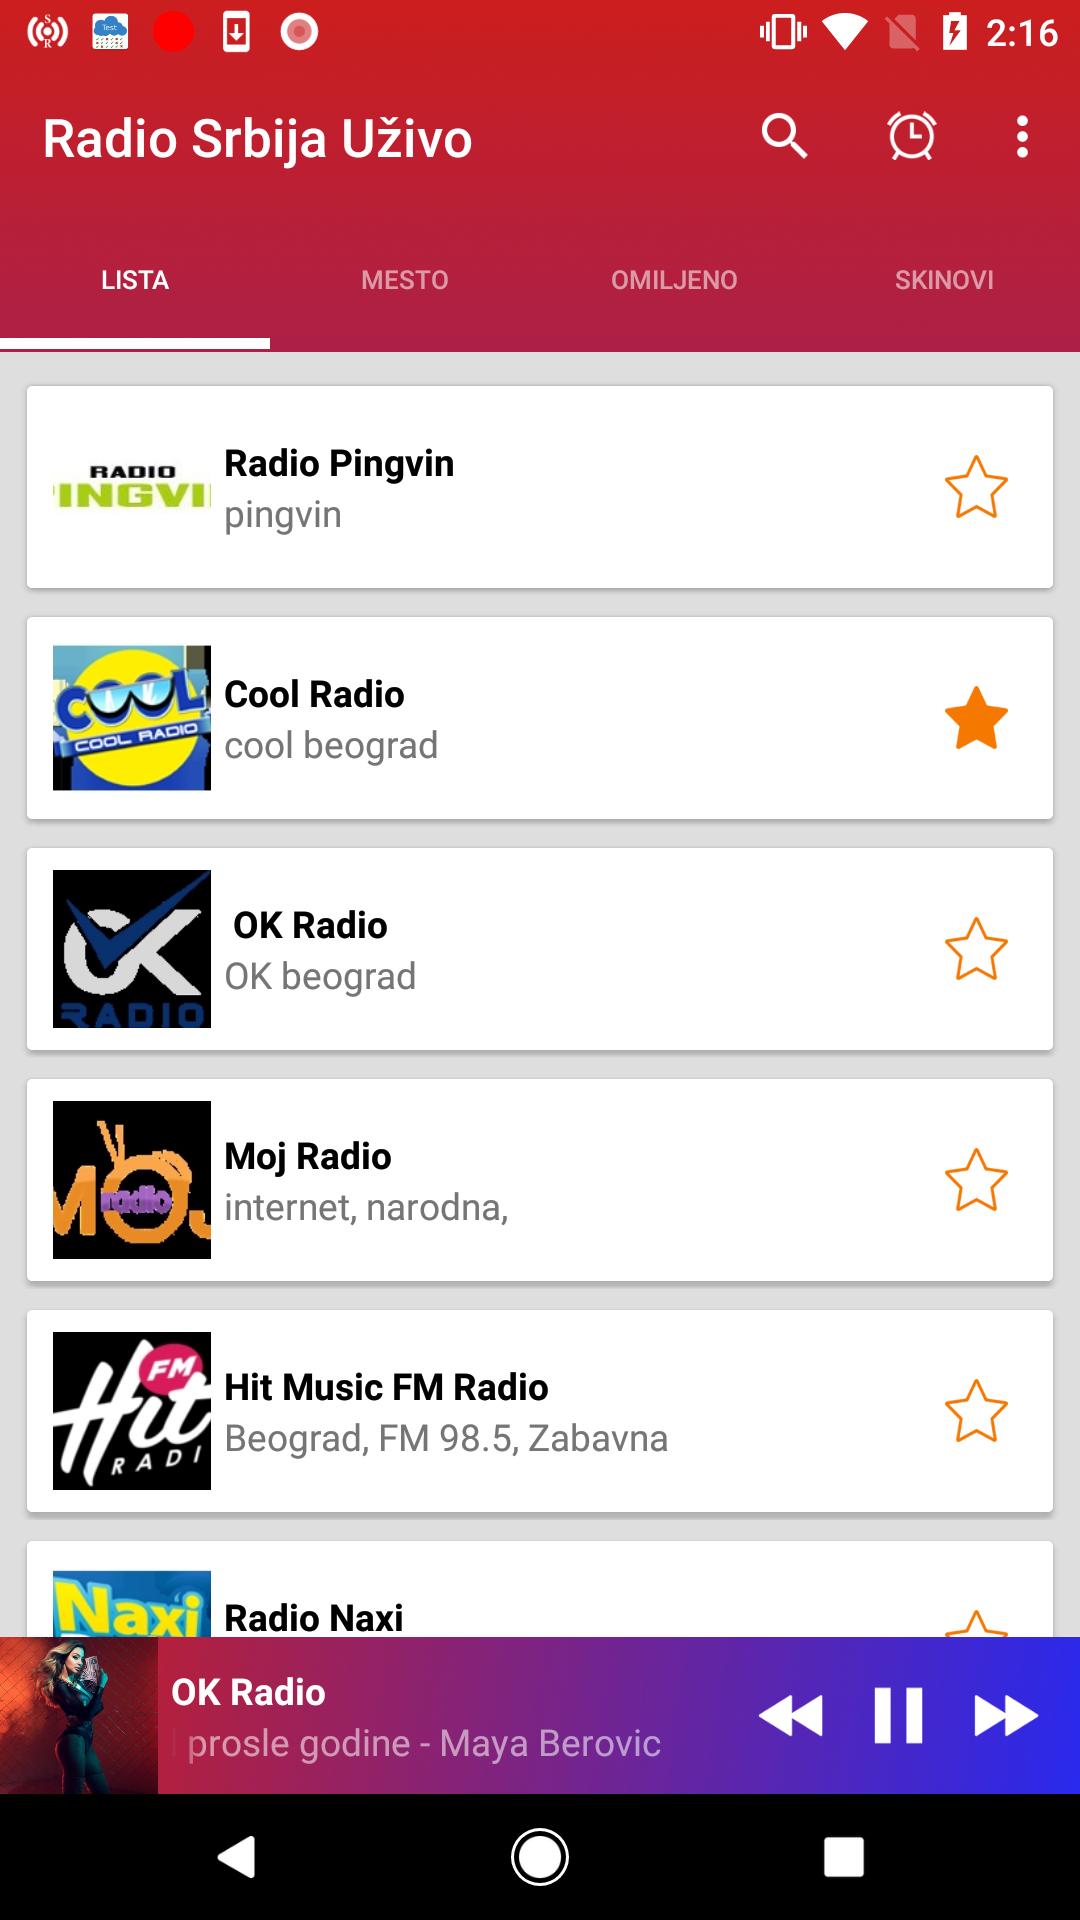 Radio Srbija Uživo for Android - APK Download